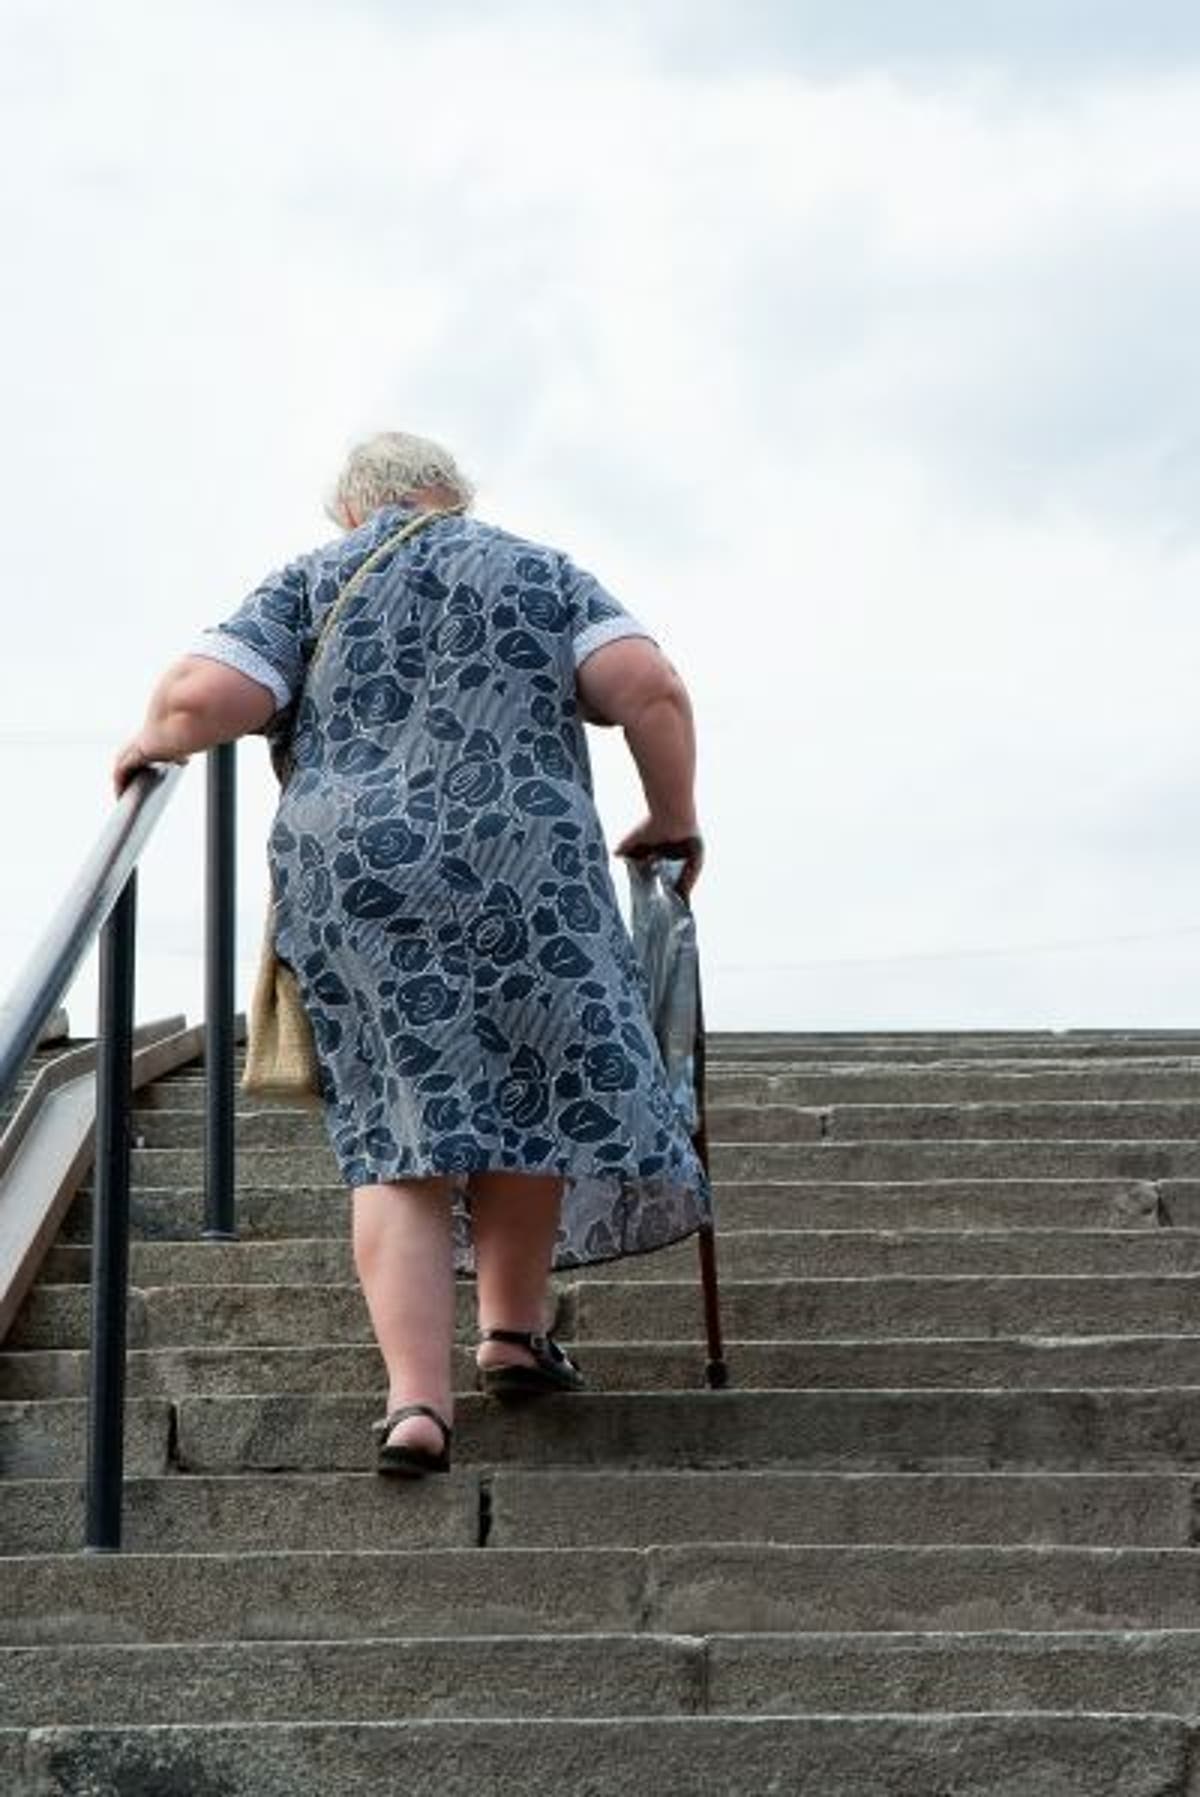 Толстая бабушка без. Бабушка по ступенькам. Бабушка идет АО летчнице. Пожилая женщина идет. Бабки на лестнице.